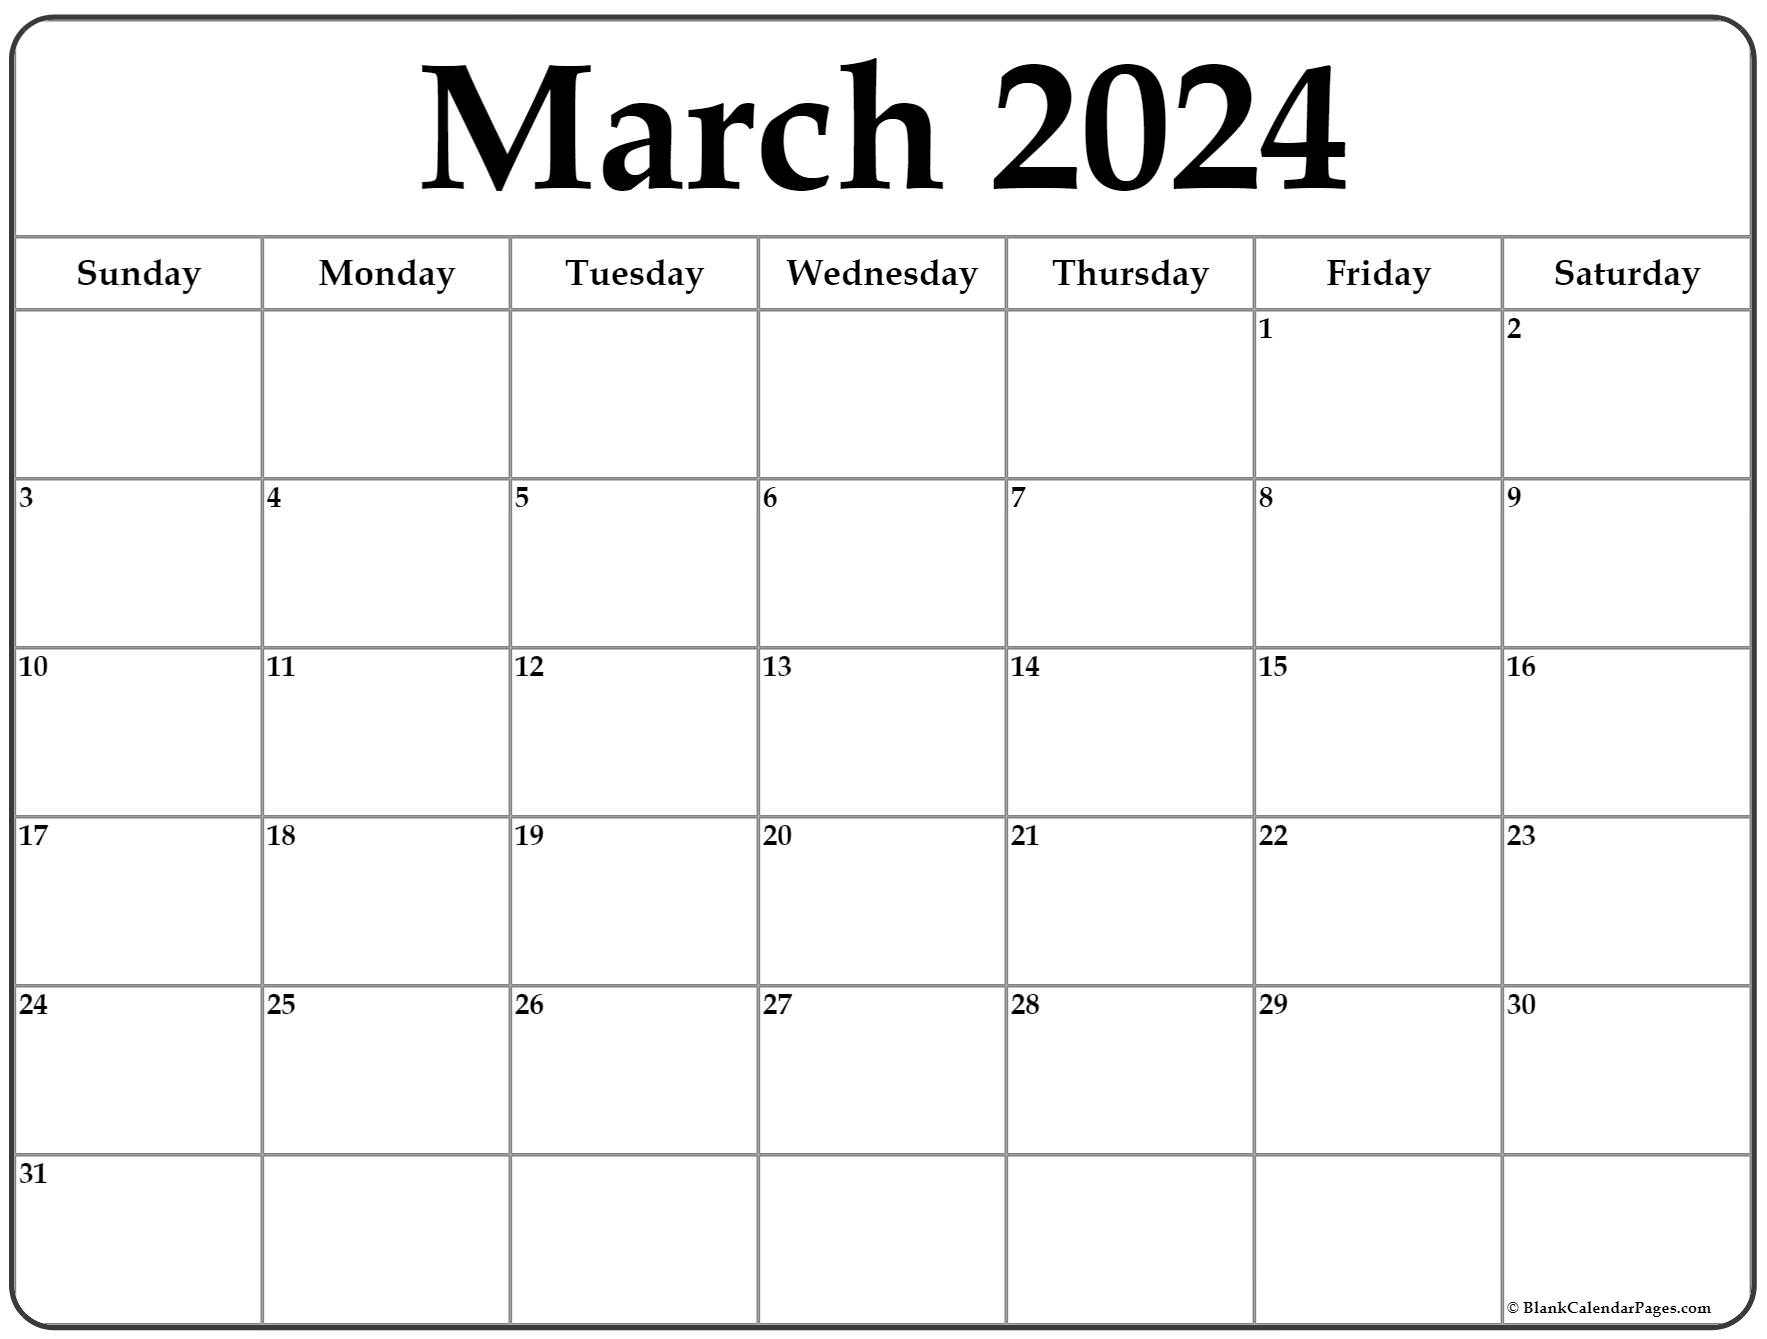 March 2022 Free Printable Calendar March 2022 Calendar | Free Printable Calendar Templates